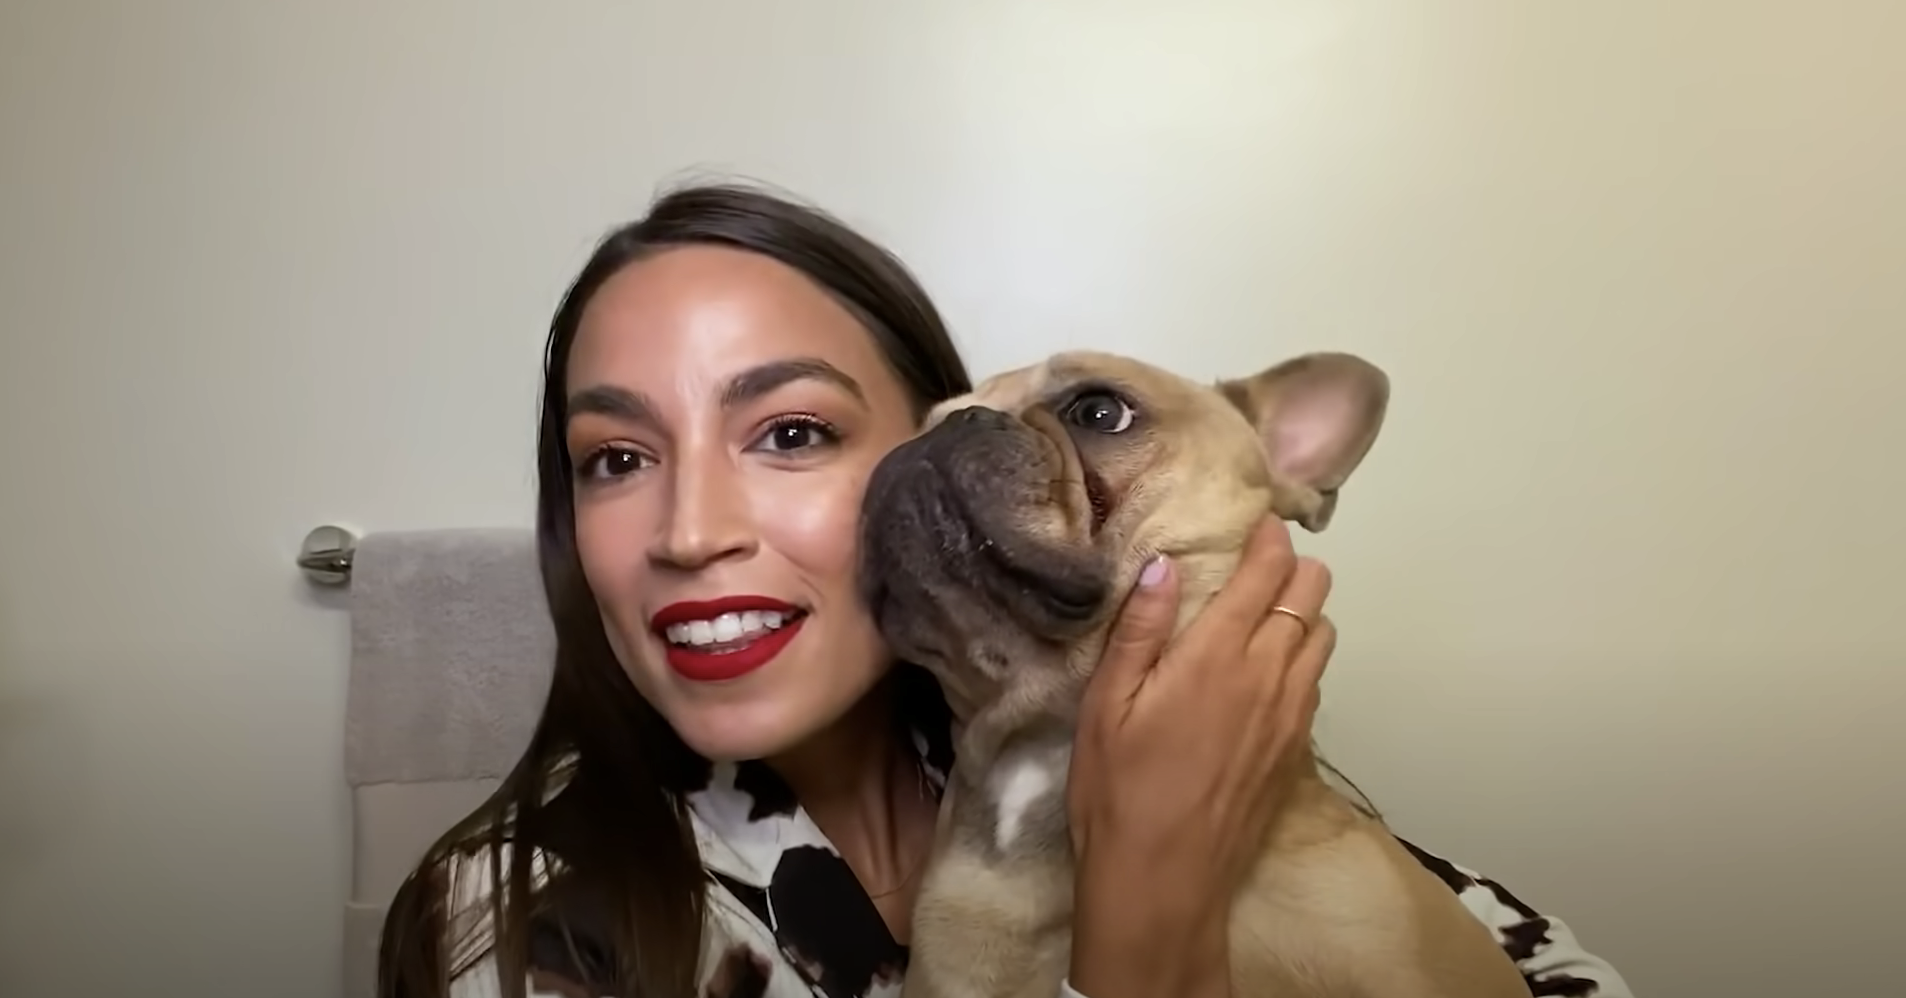 Alexandria Ocasio-Cortez smiling and holding her pet dog.